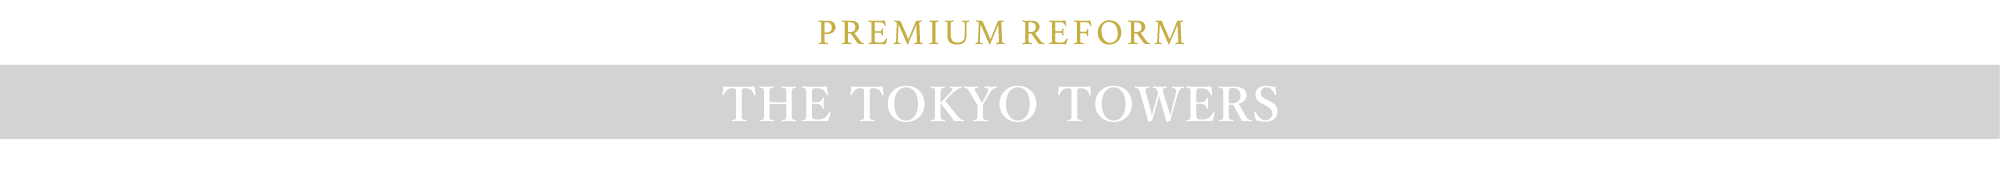 PREMIUM REFORM THE TOKYO TOWERS